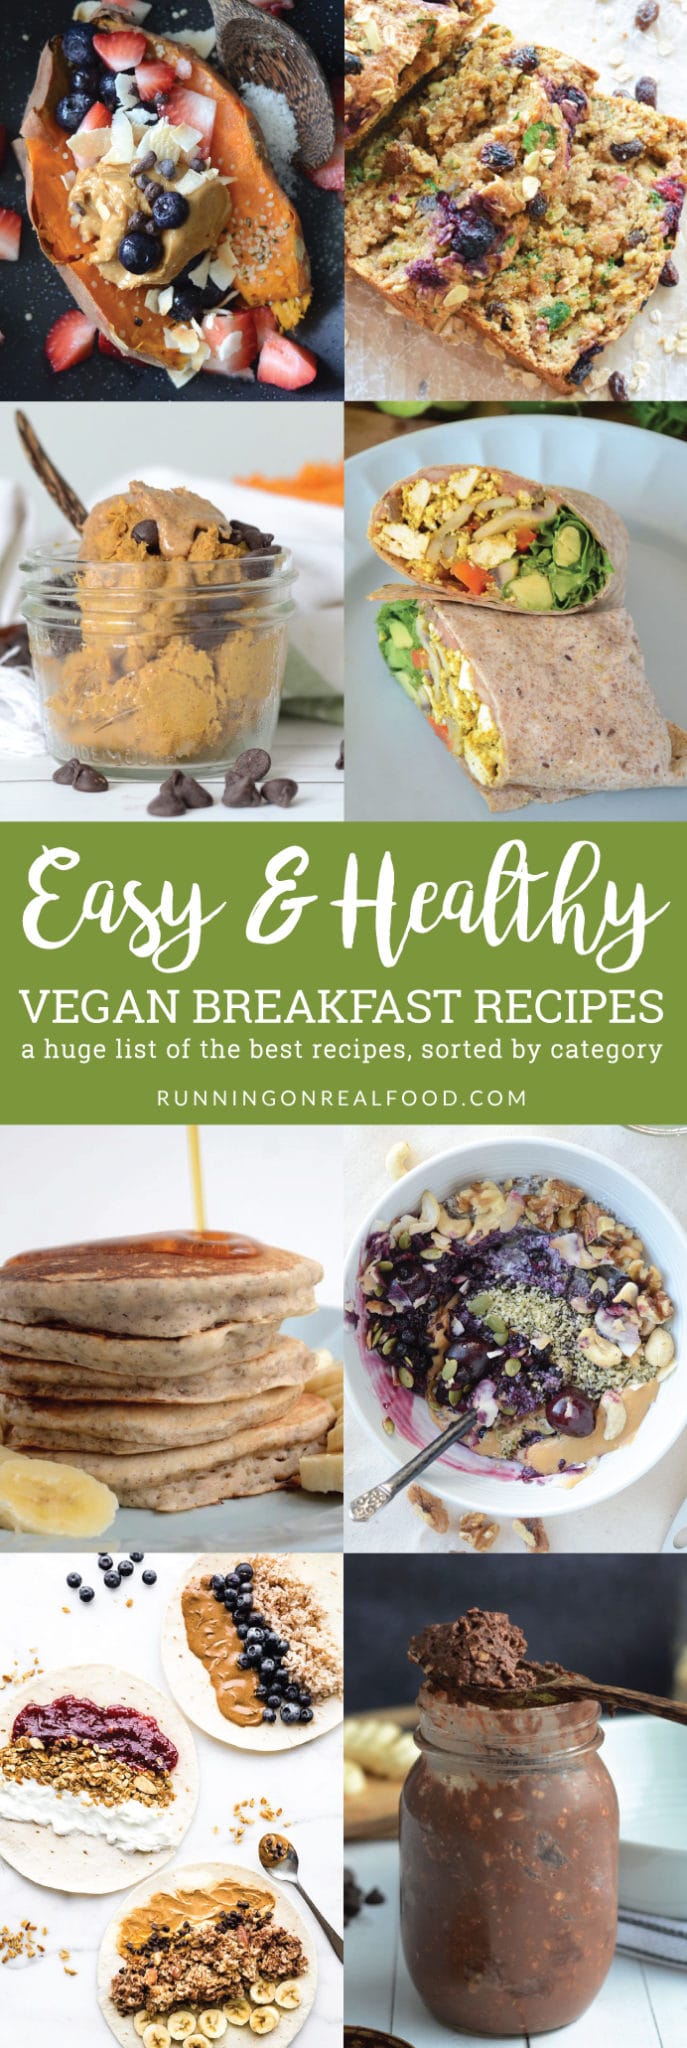 Easy Healthy Vegan Breakfast Recipes - Running on Real Food